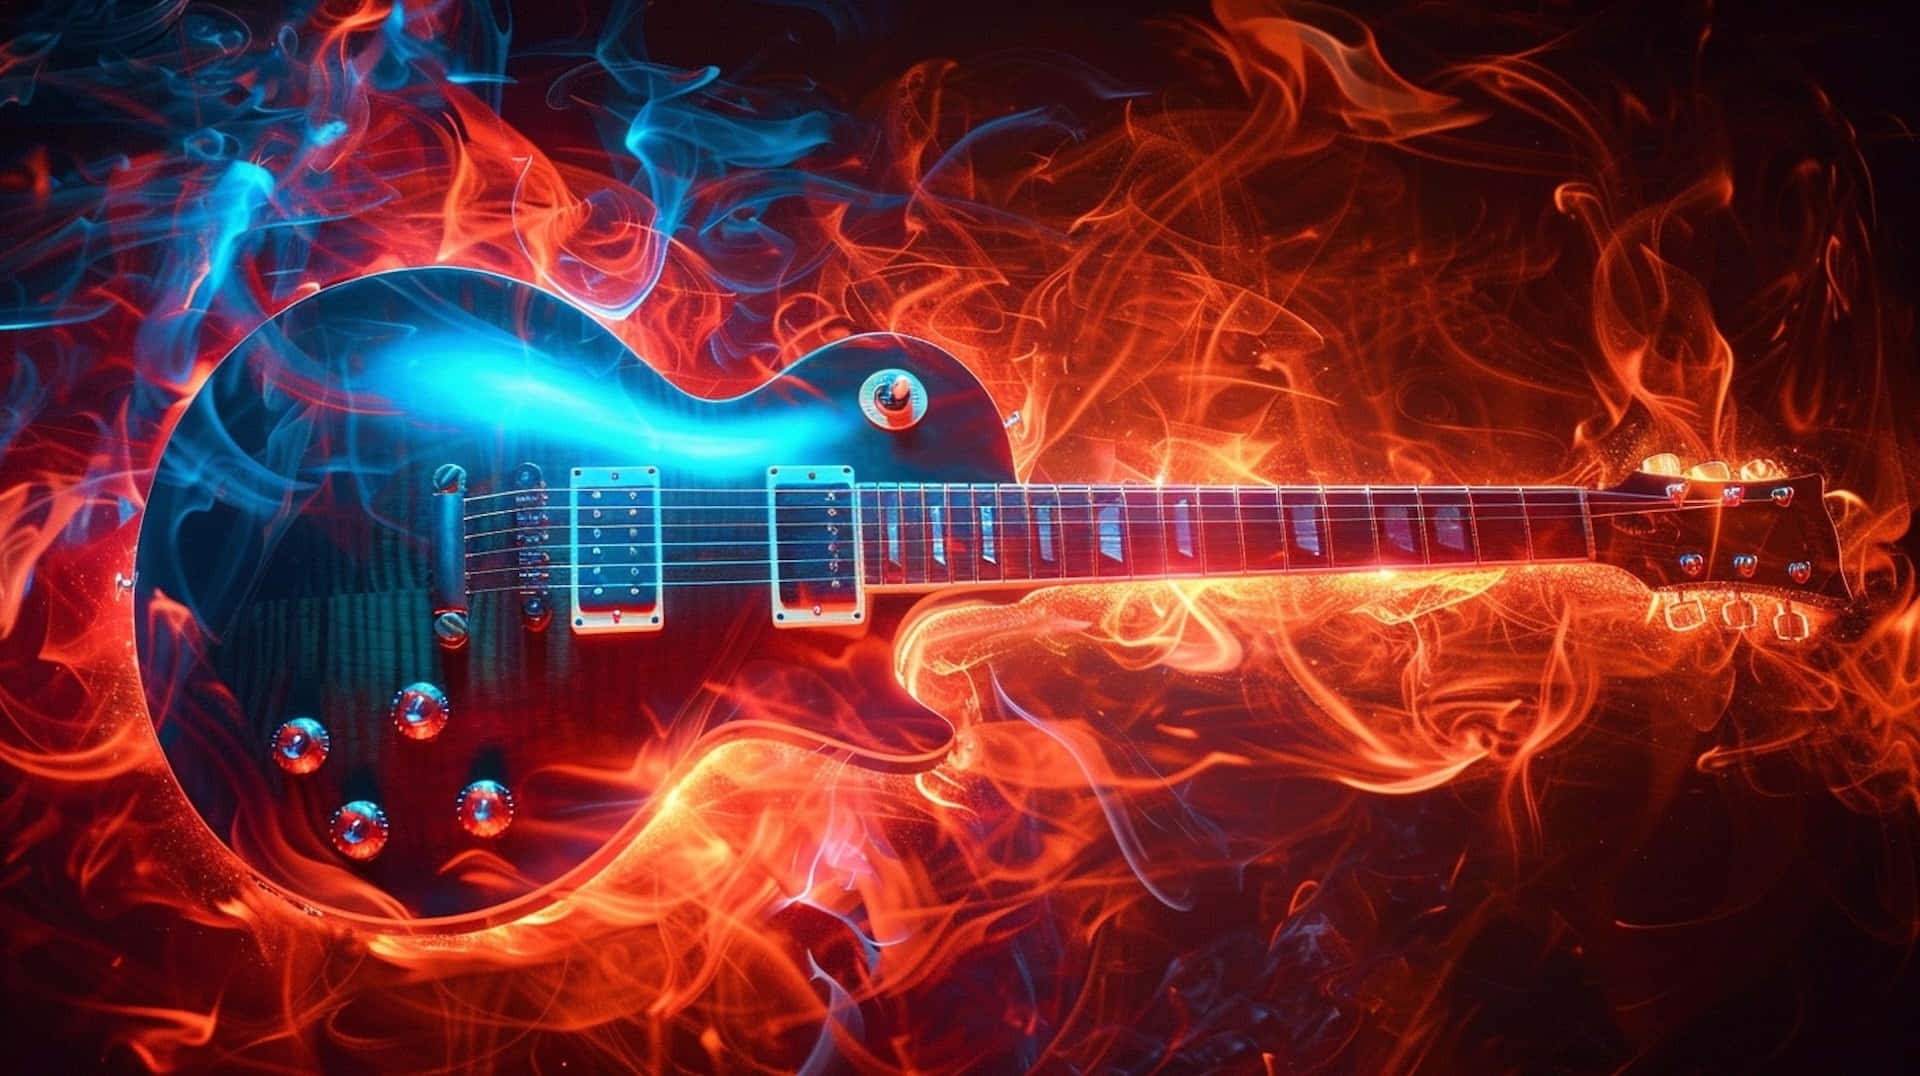 Fiery Electric Guitar Blaze